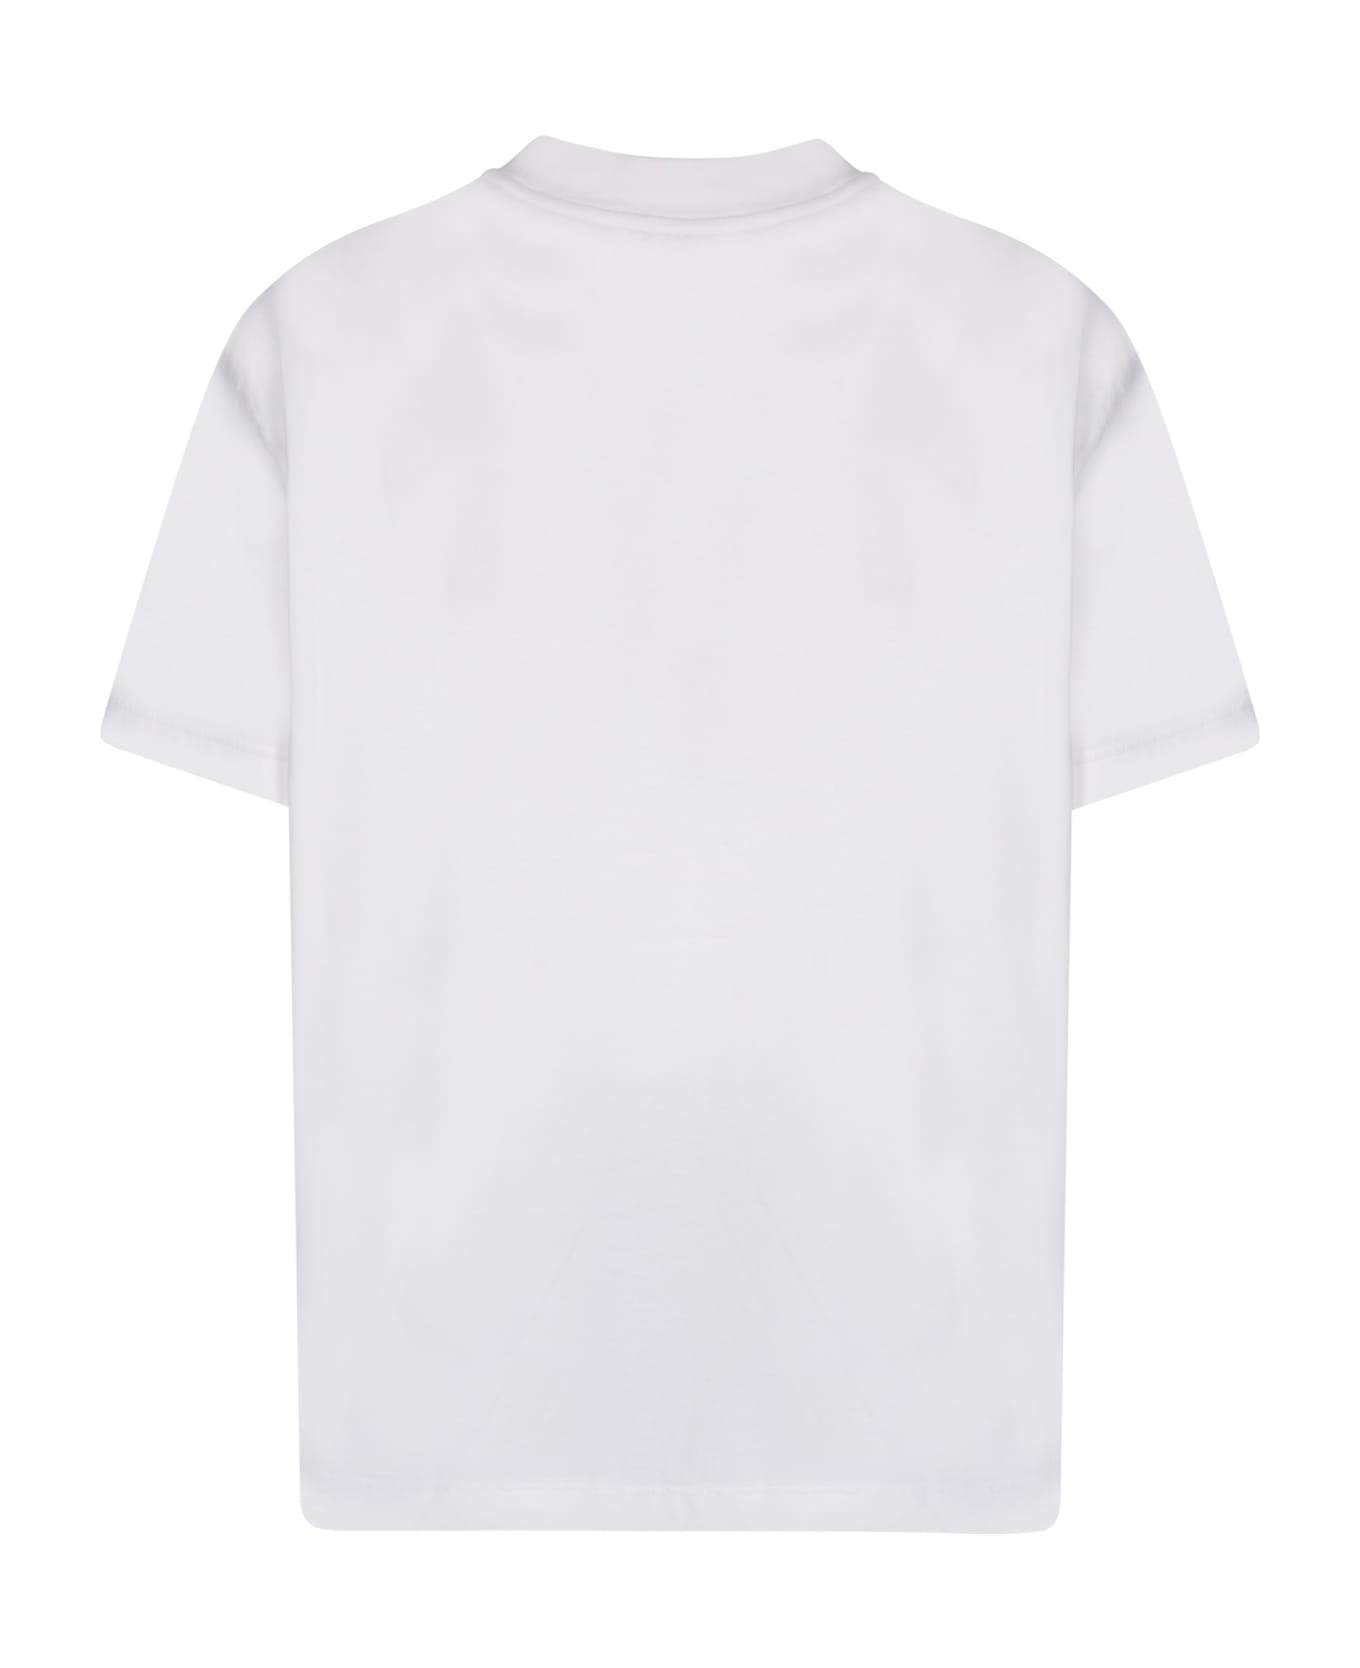 Bonsai Box Logo White T-shirt - White シャツ